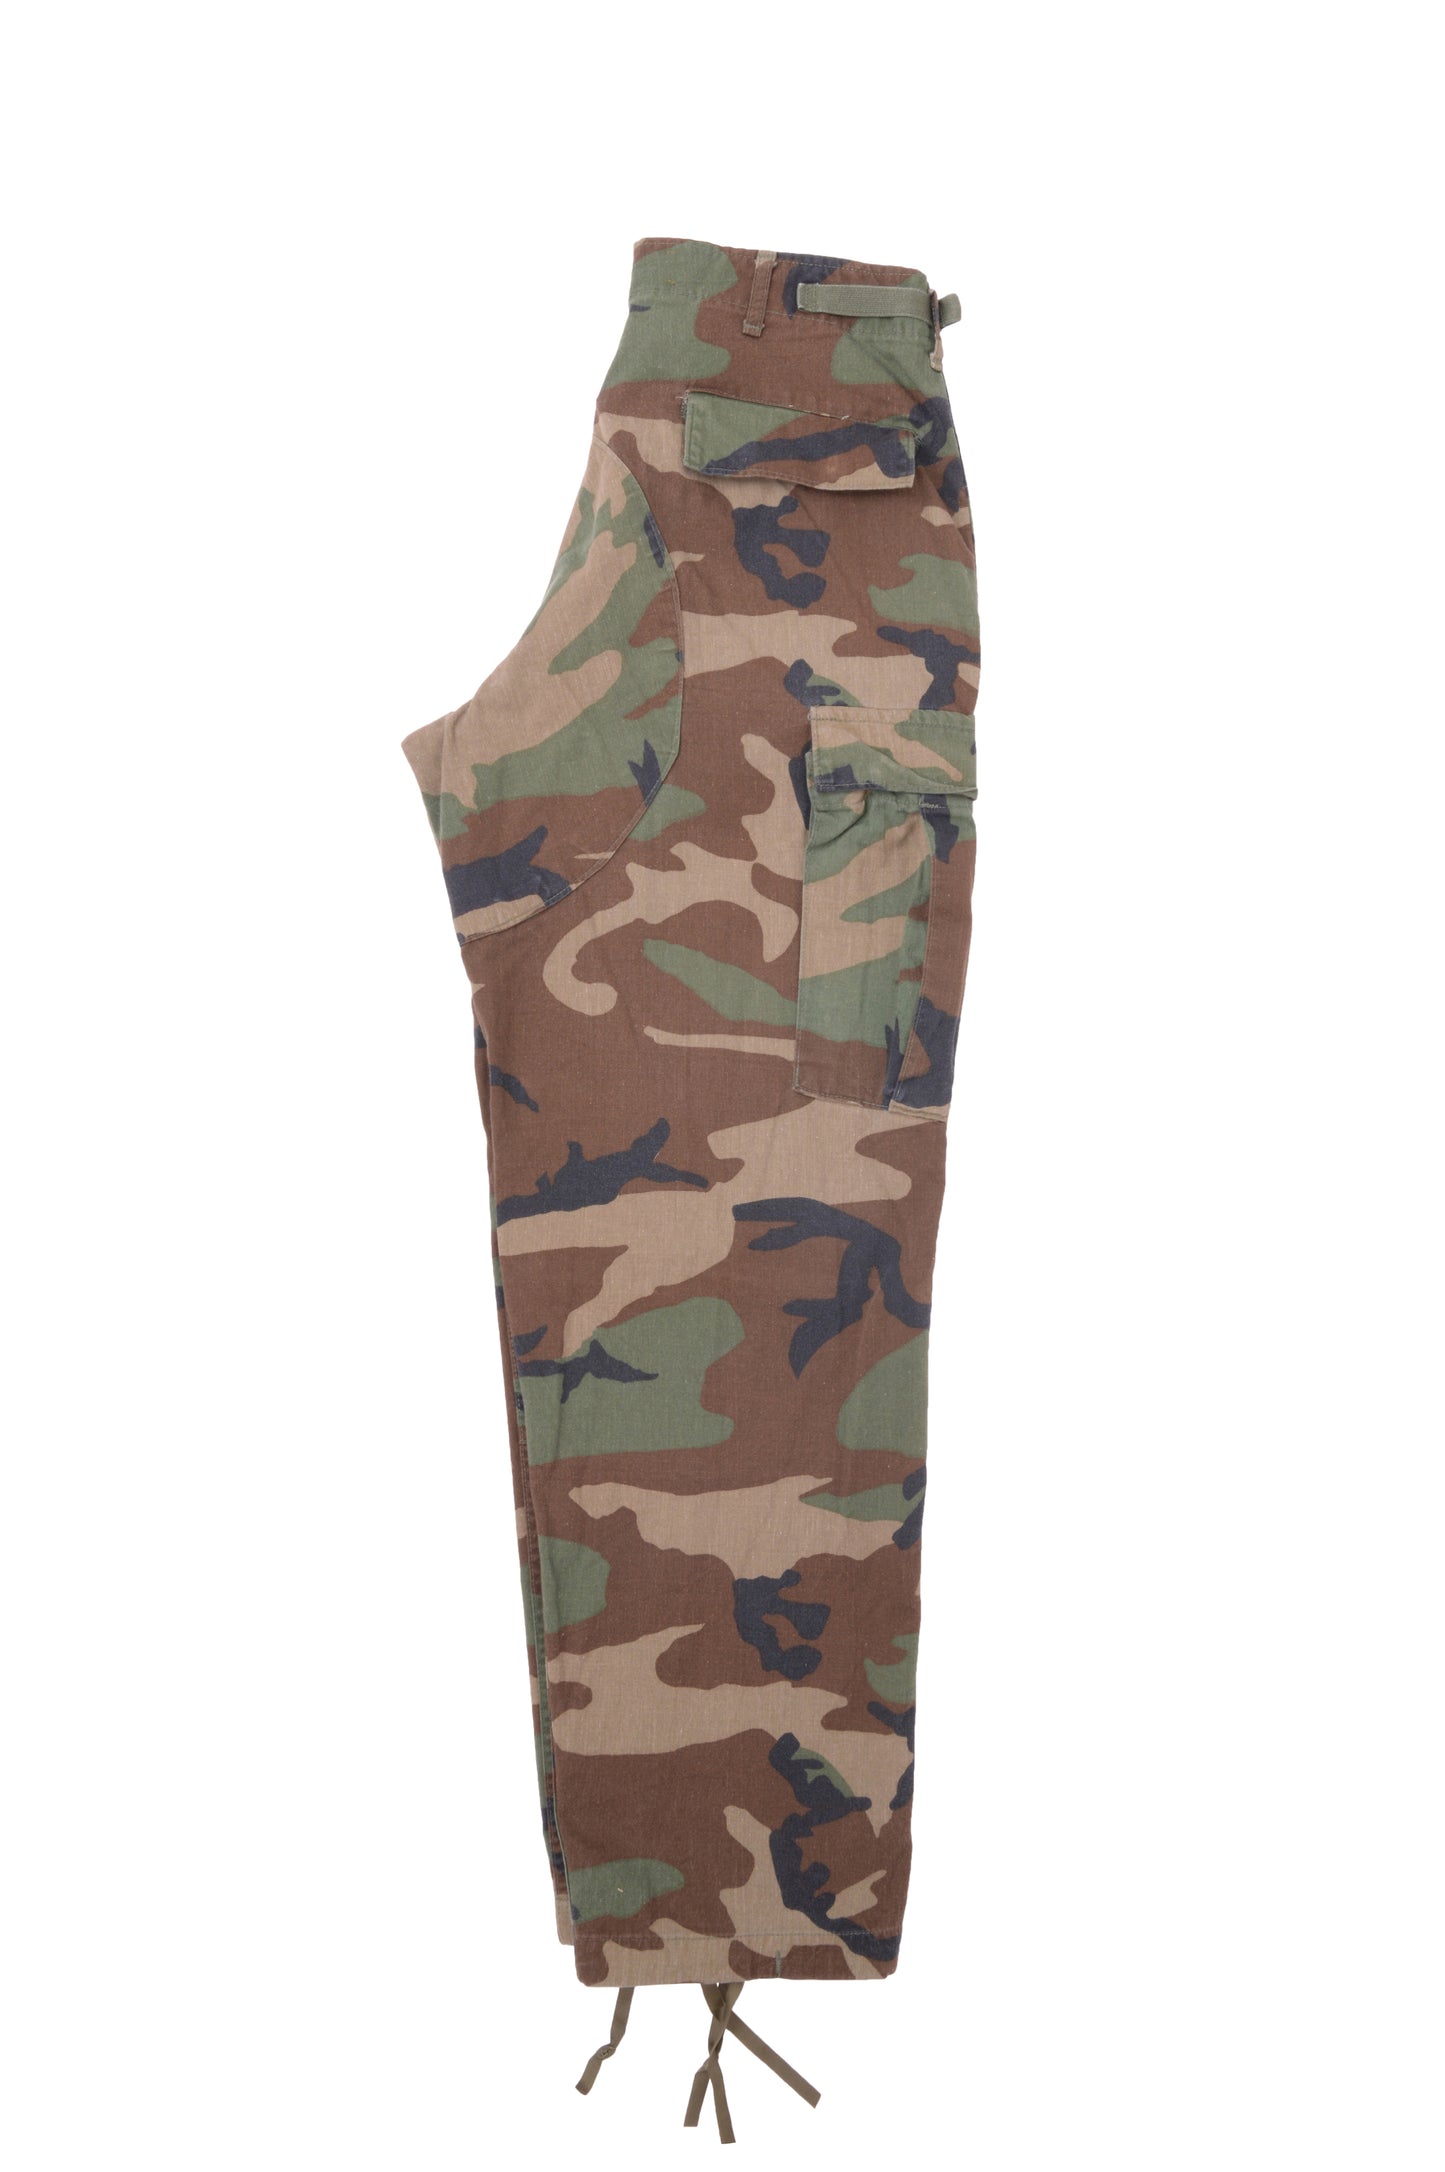 Authentic Military Camo Pants